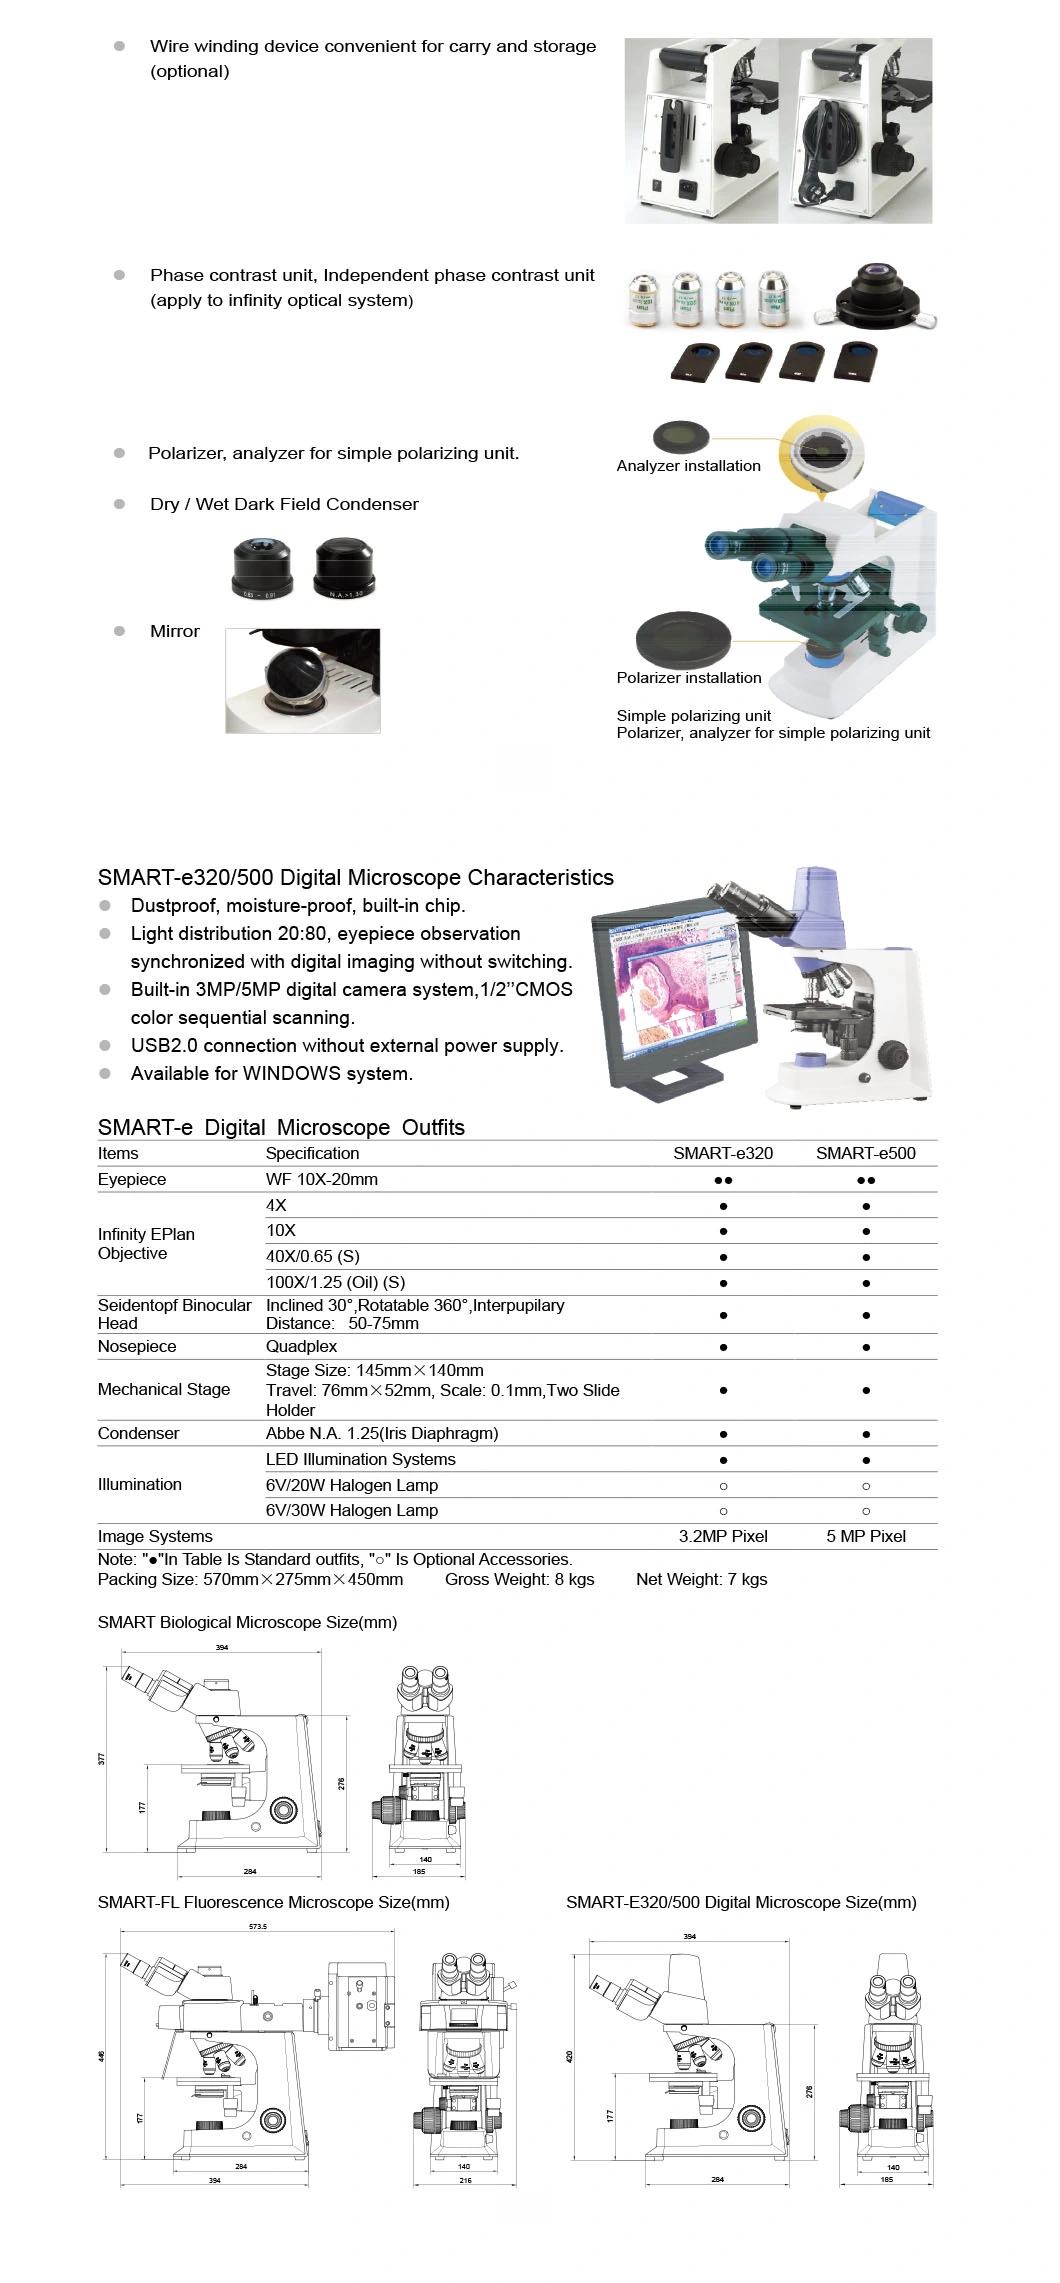 Digital Camera Biological Microscopes for Digital Compare Microscope